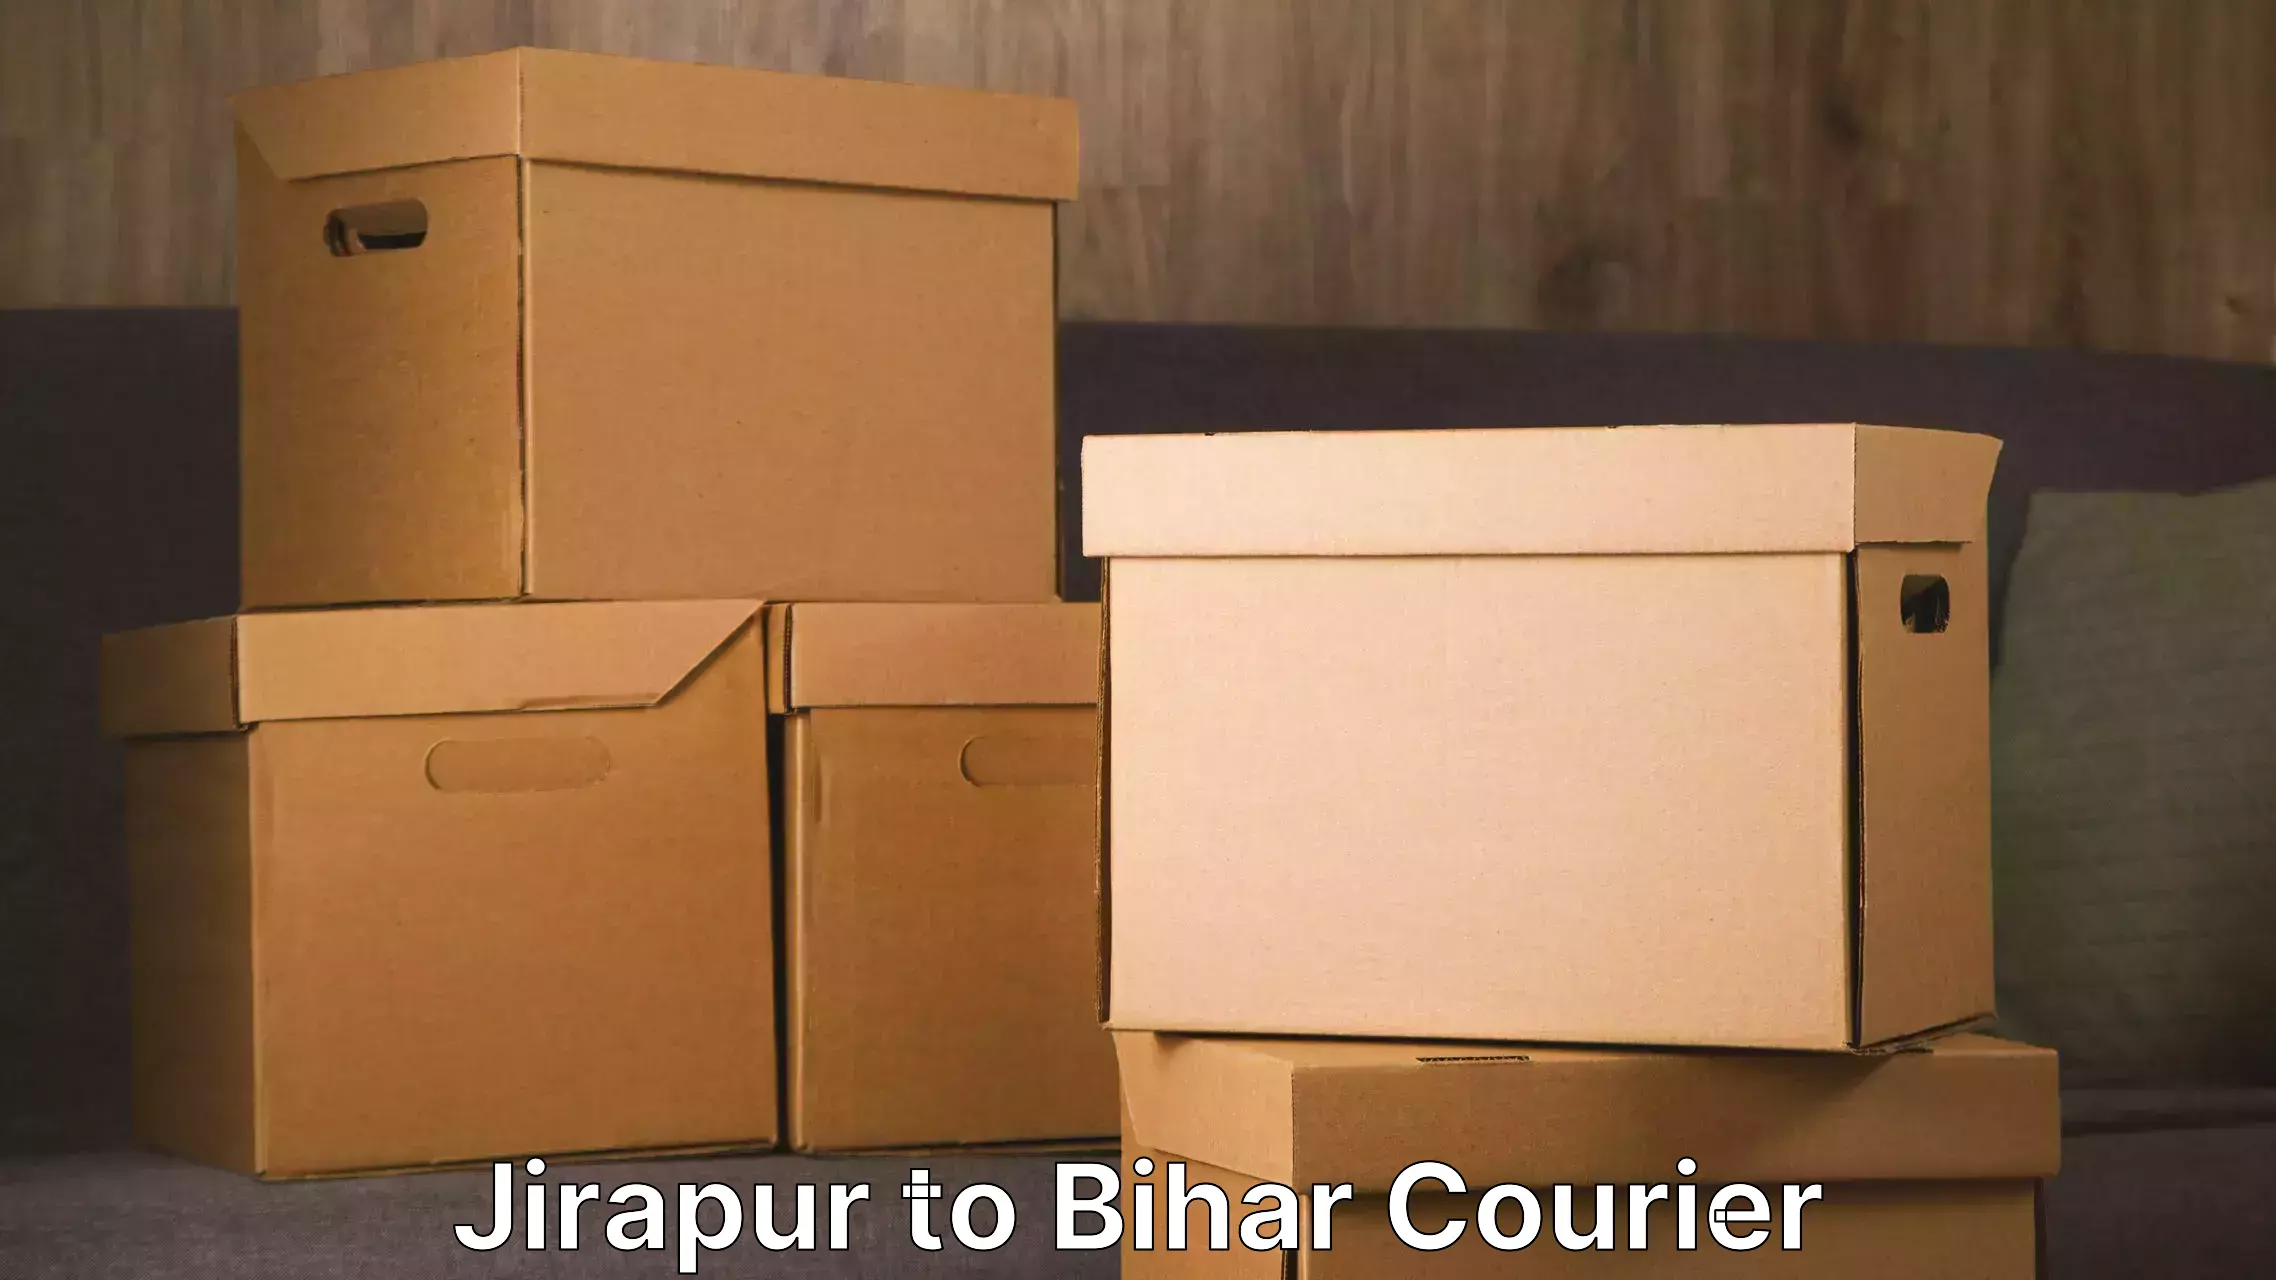 Professional moving company Jirapur to Bhojpur